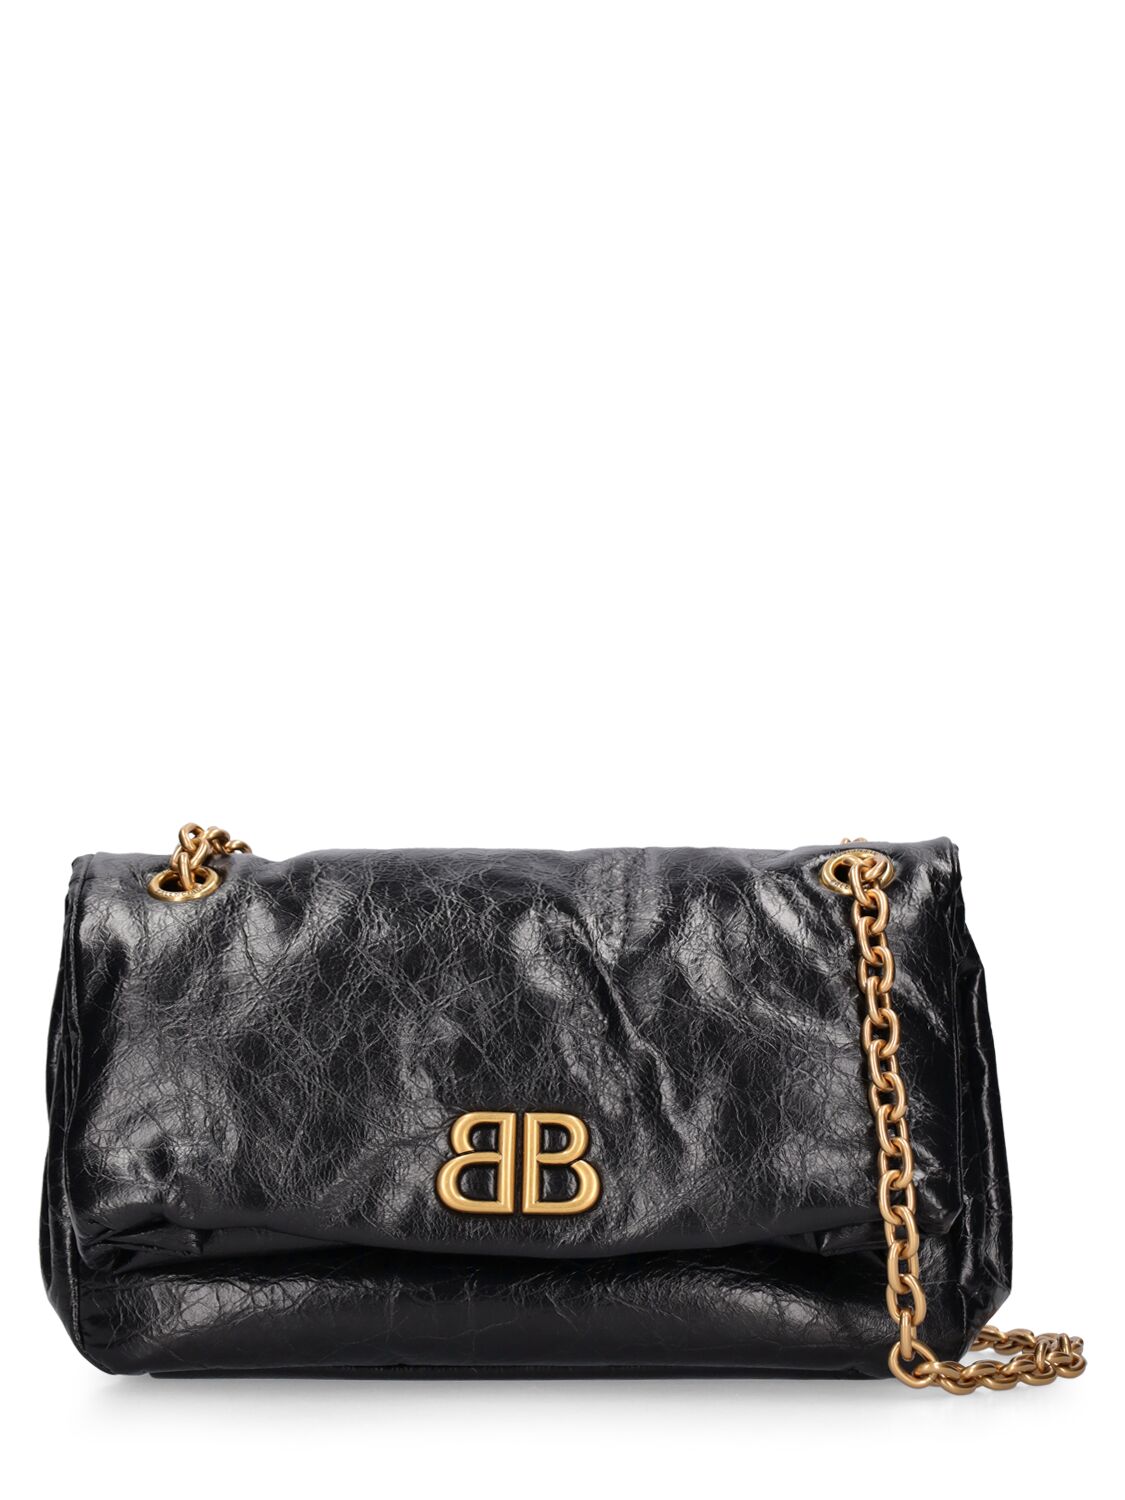 Balenciaga Small Monaco Leather Shoulder Bag In Black